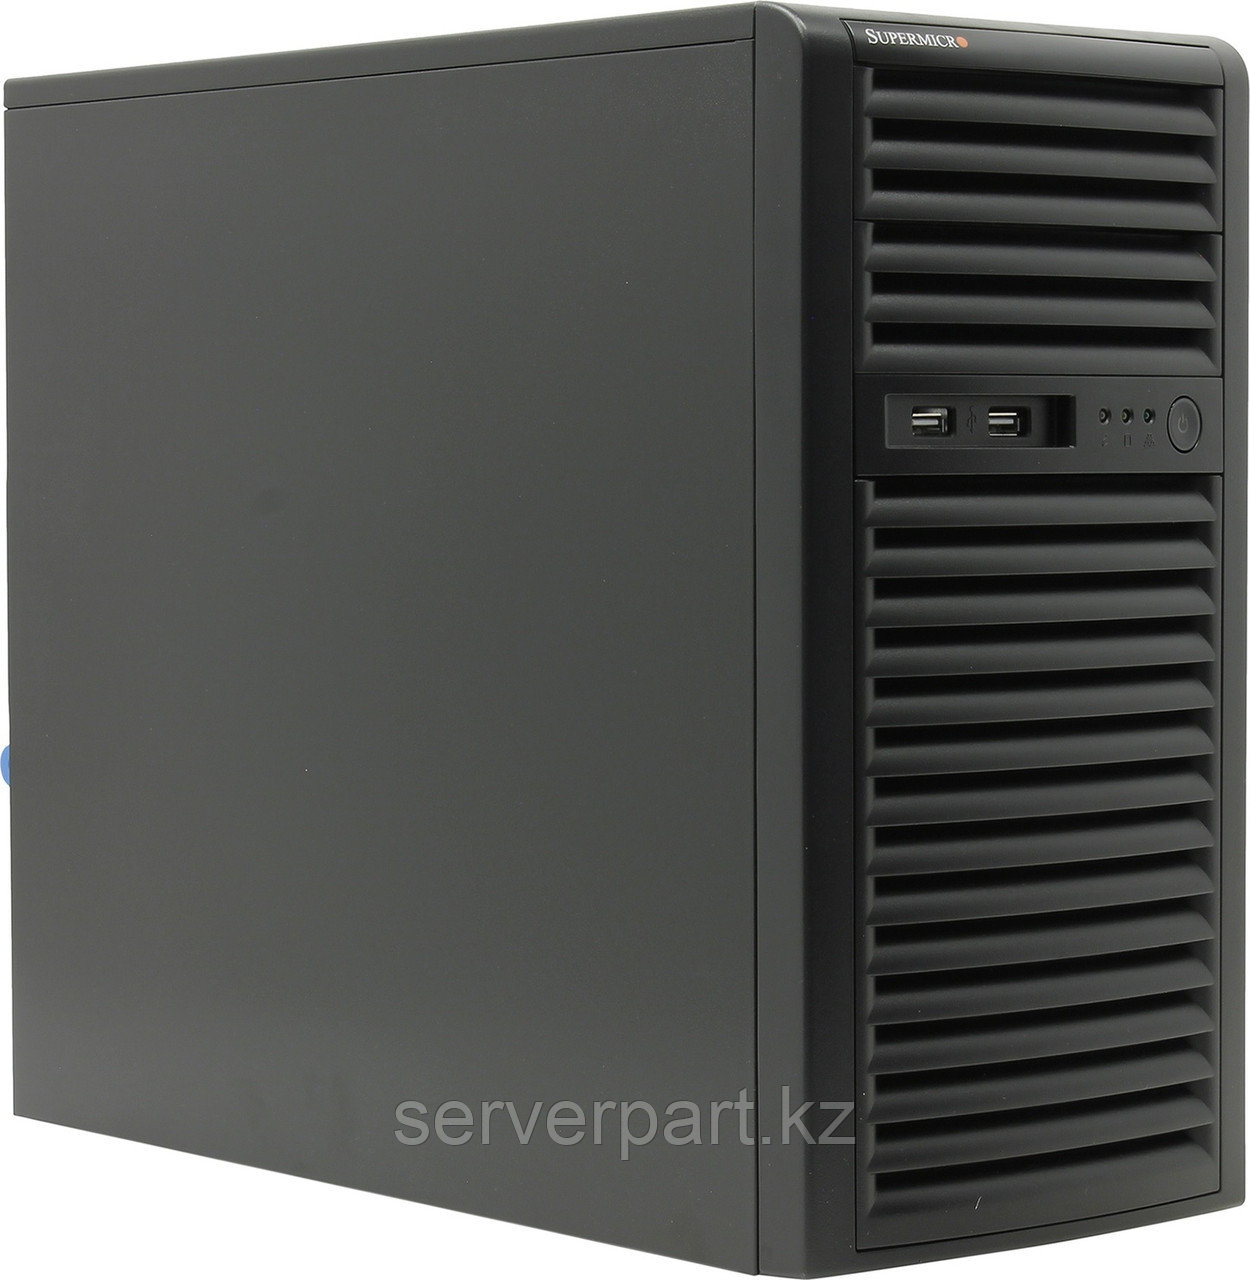 Сервер Supermicro 5039D Tower/4-core intel xeon E3-1220v6 3GHz/16GB UDIMM nECC/1x480GB SSD RI Hyb